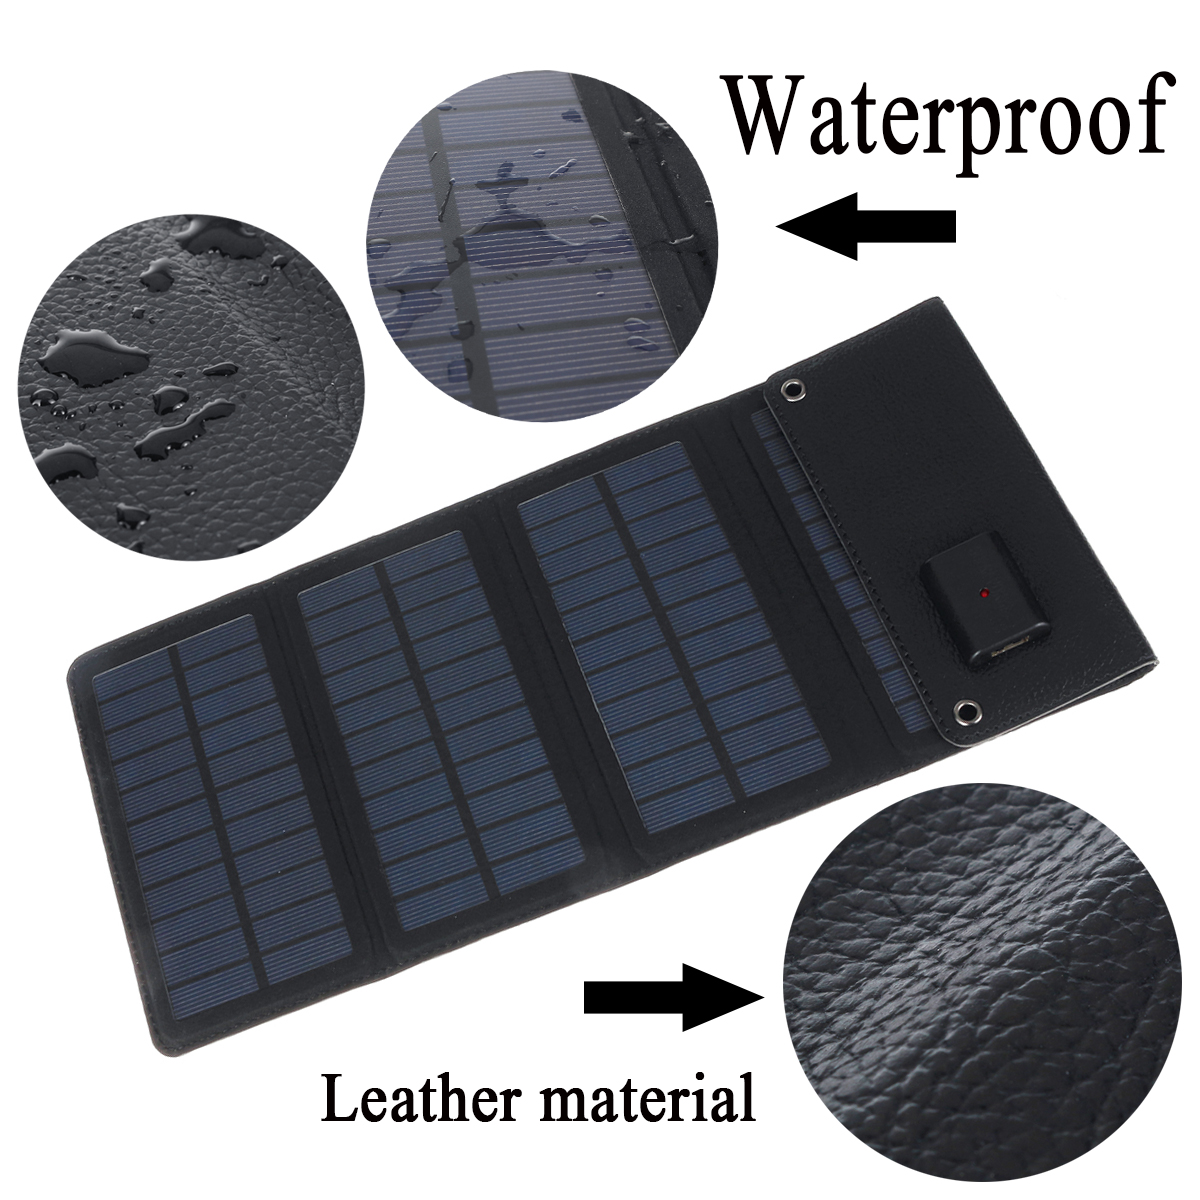 7W 5V Waterproof Foldable Mono-crystalline Silicon Solar Panel With LED Charging indicator & USB Interface 17